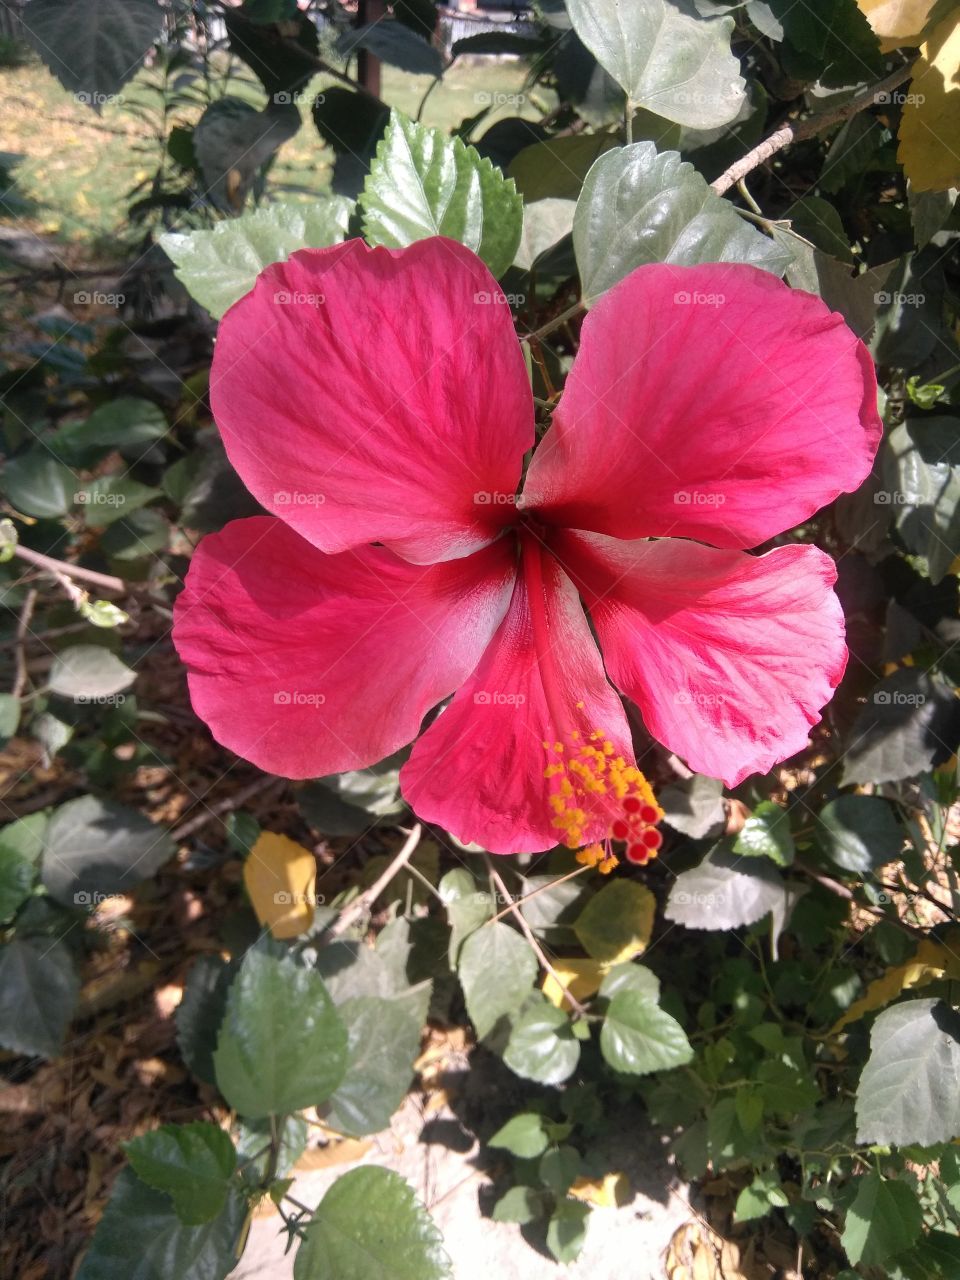 Gudhal flower